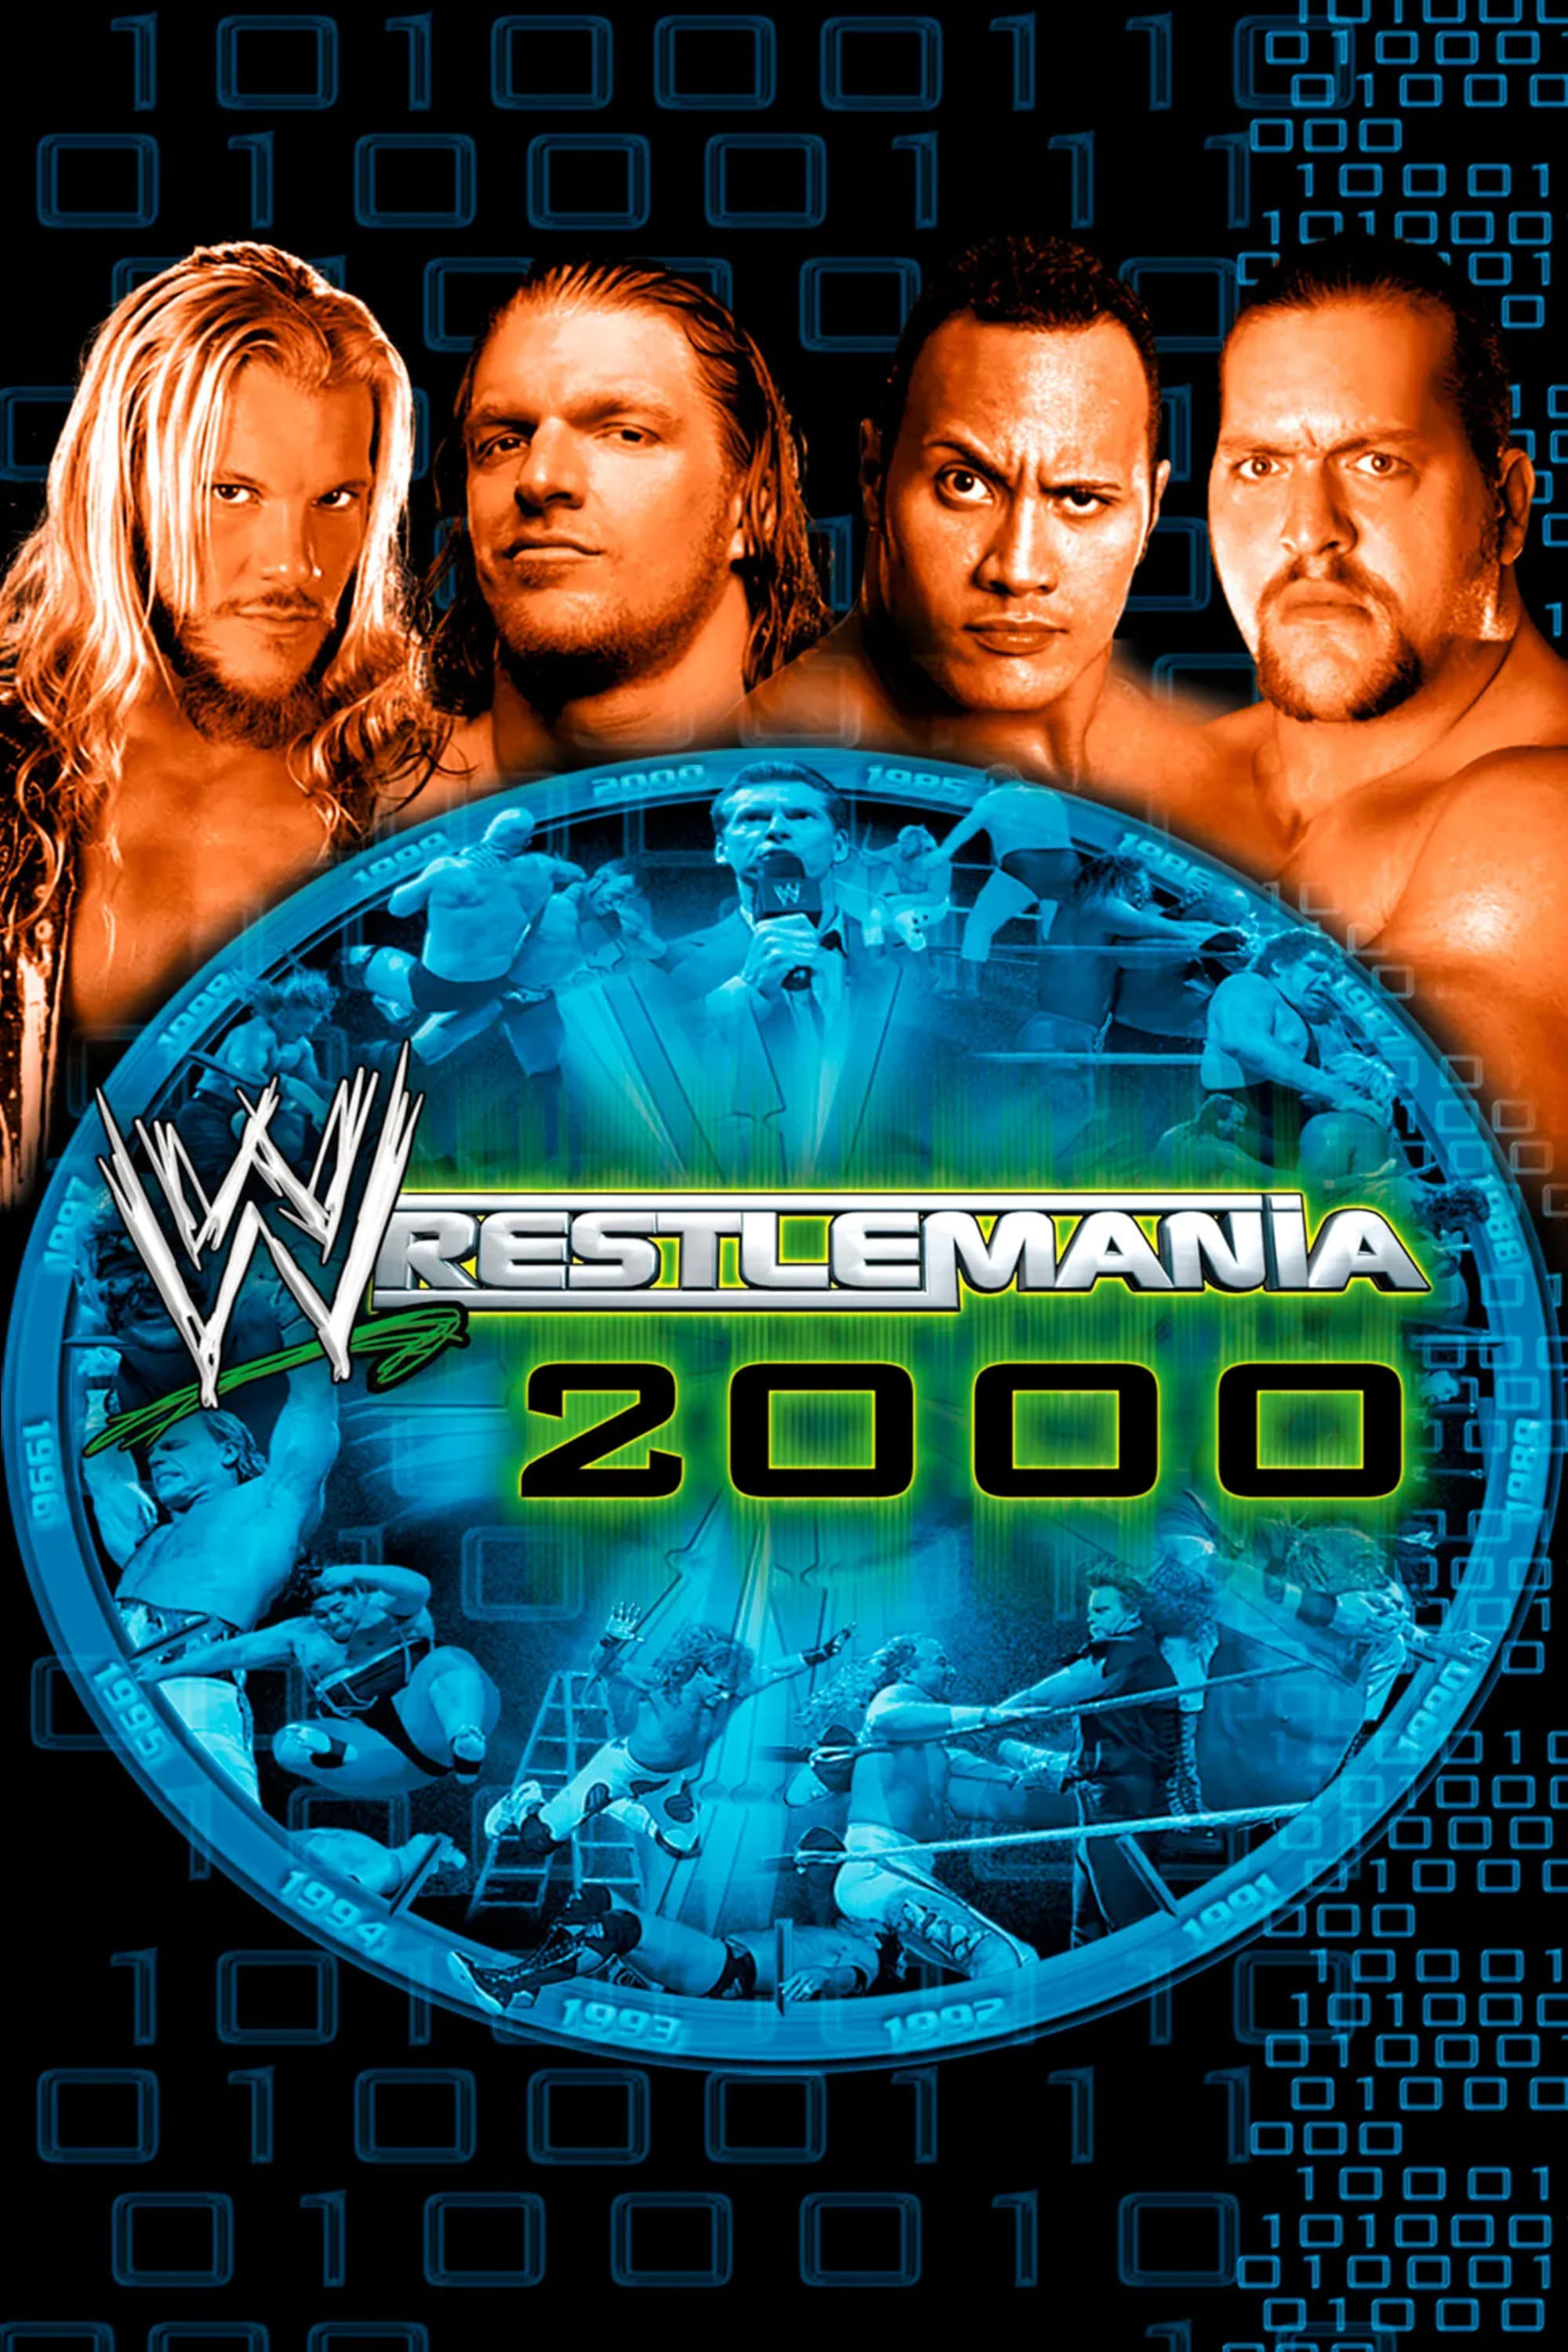 WWE WrestleMania 2000